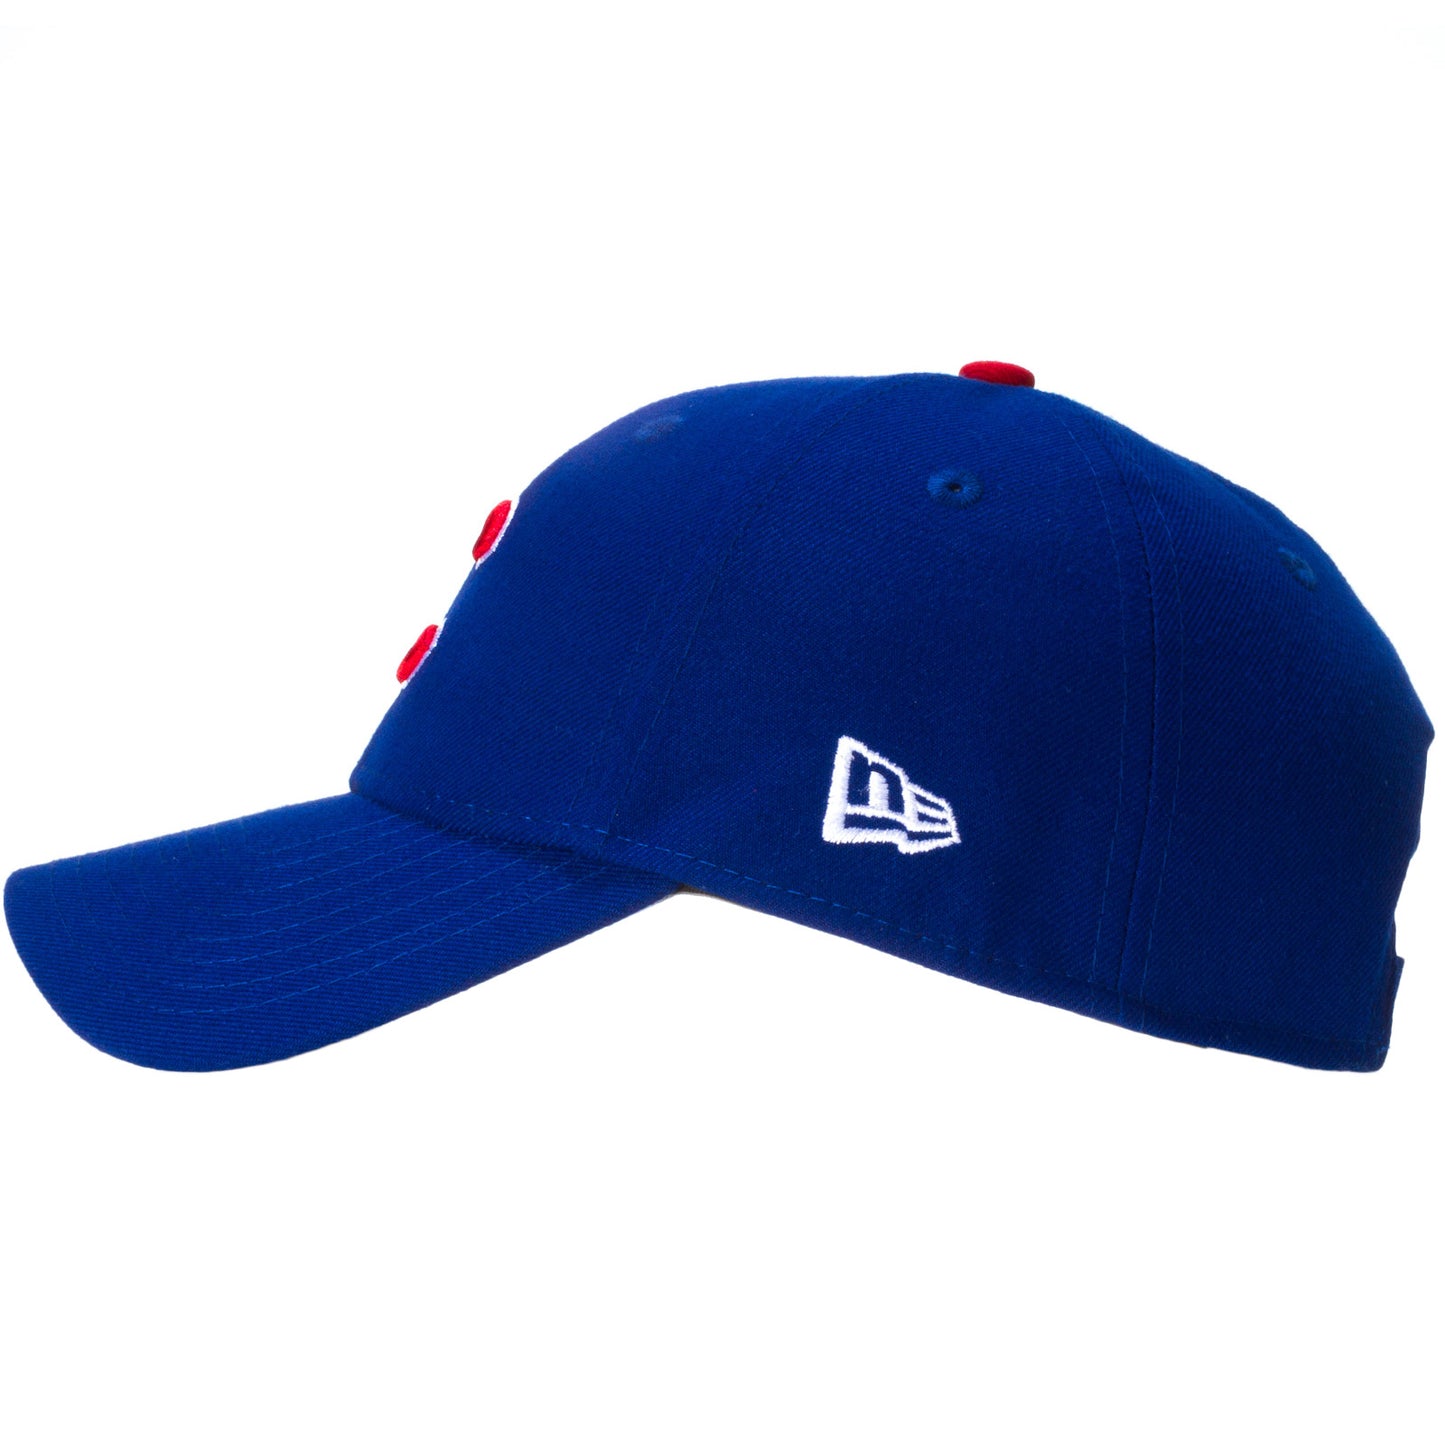 Chicago Cubs Adjustable Light Royal Hat with "C" Logo